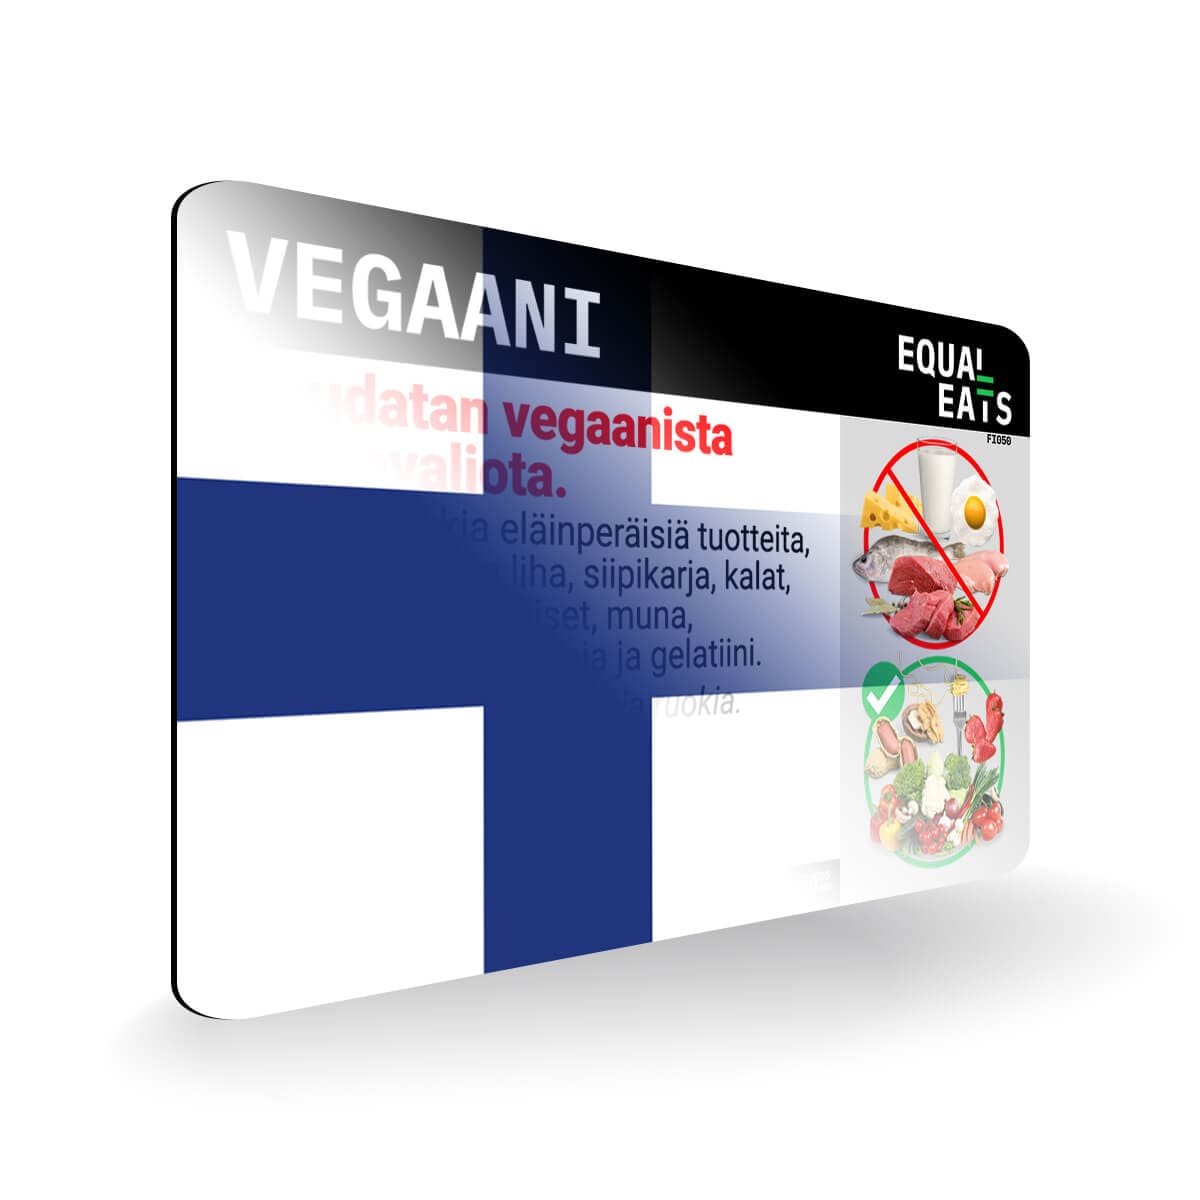 Vegan Diet in Finnish. Vegan Card for Finland